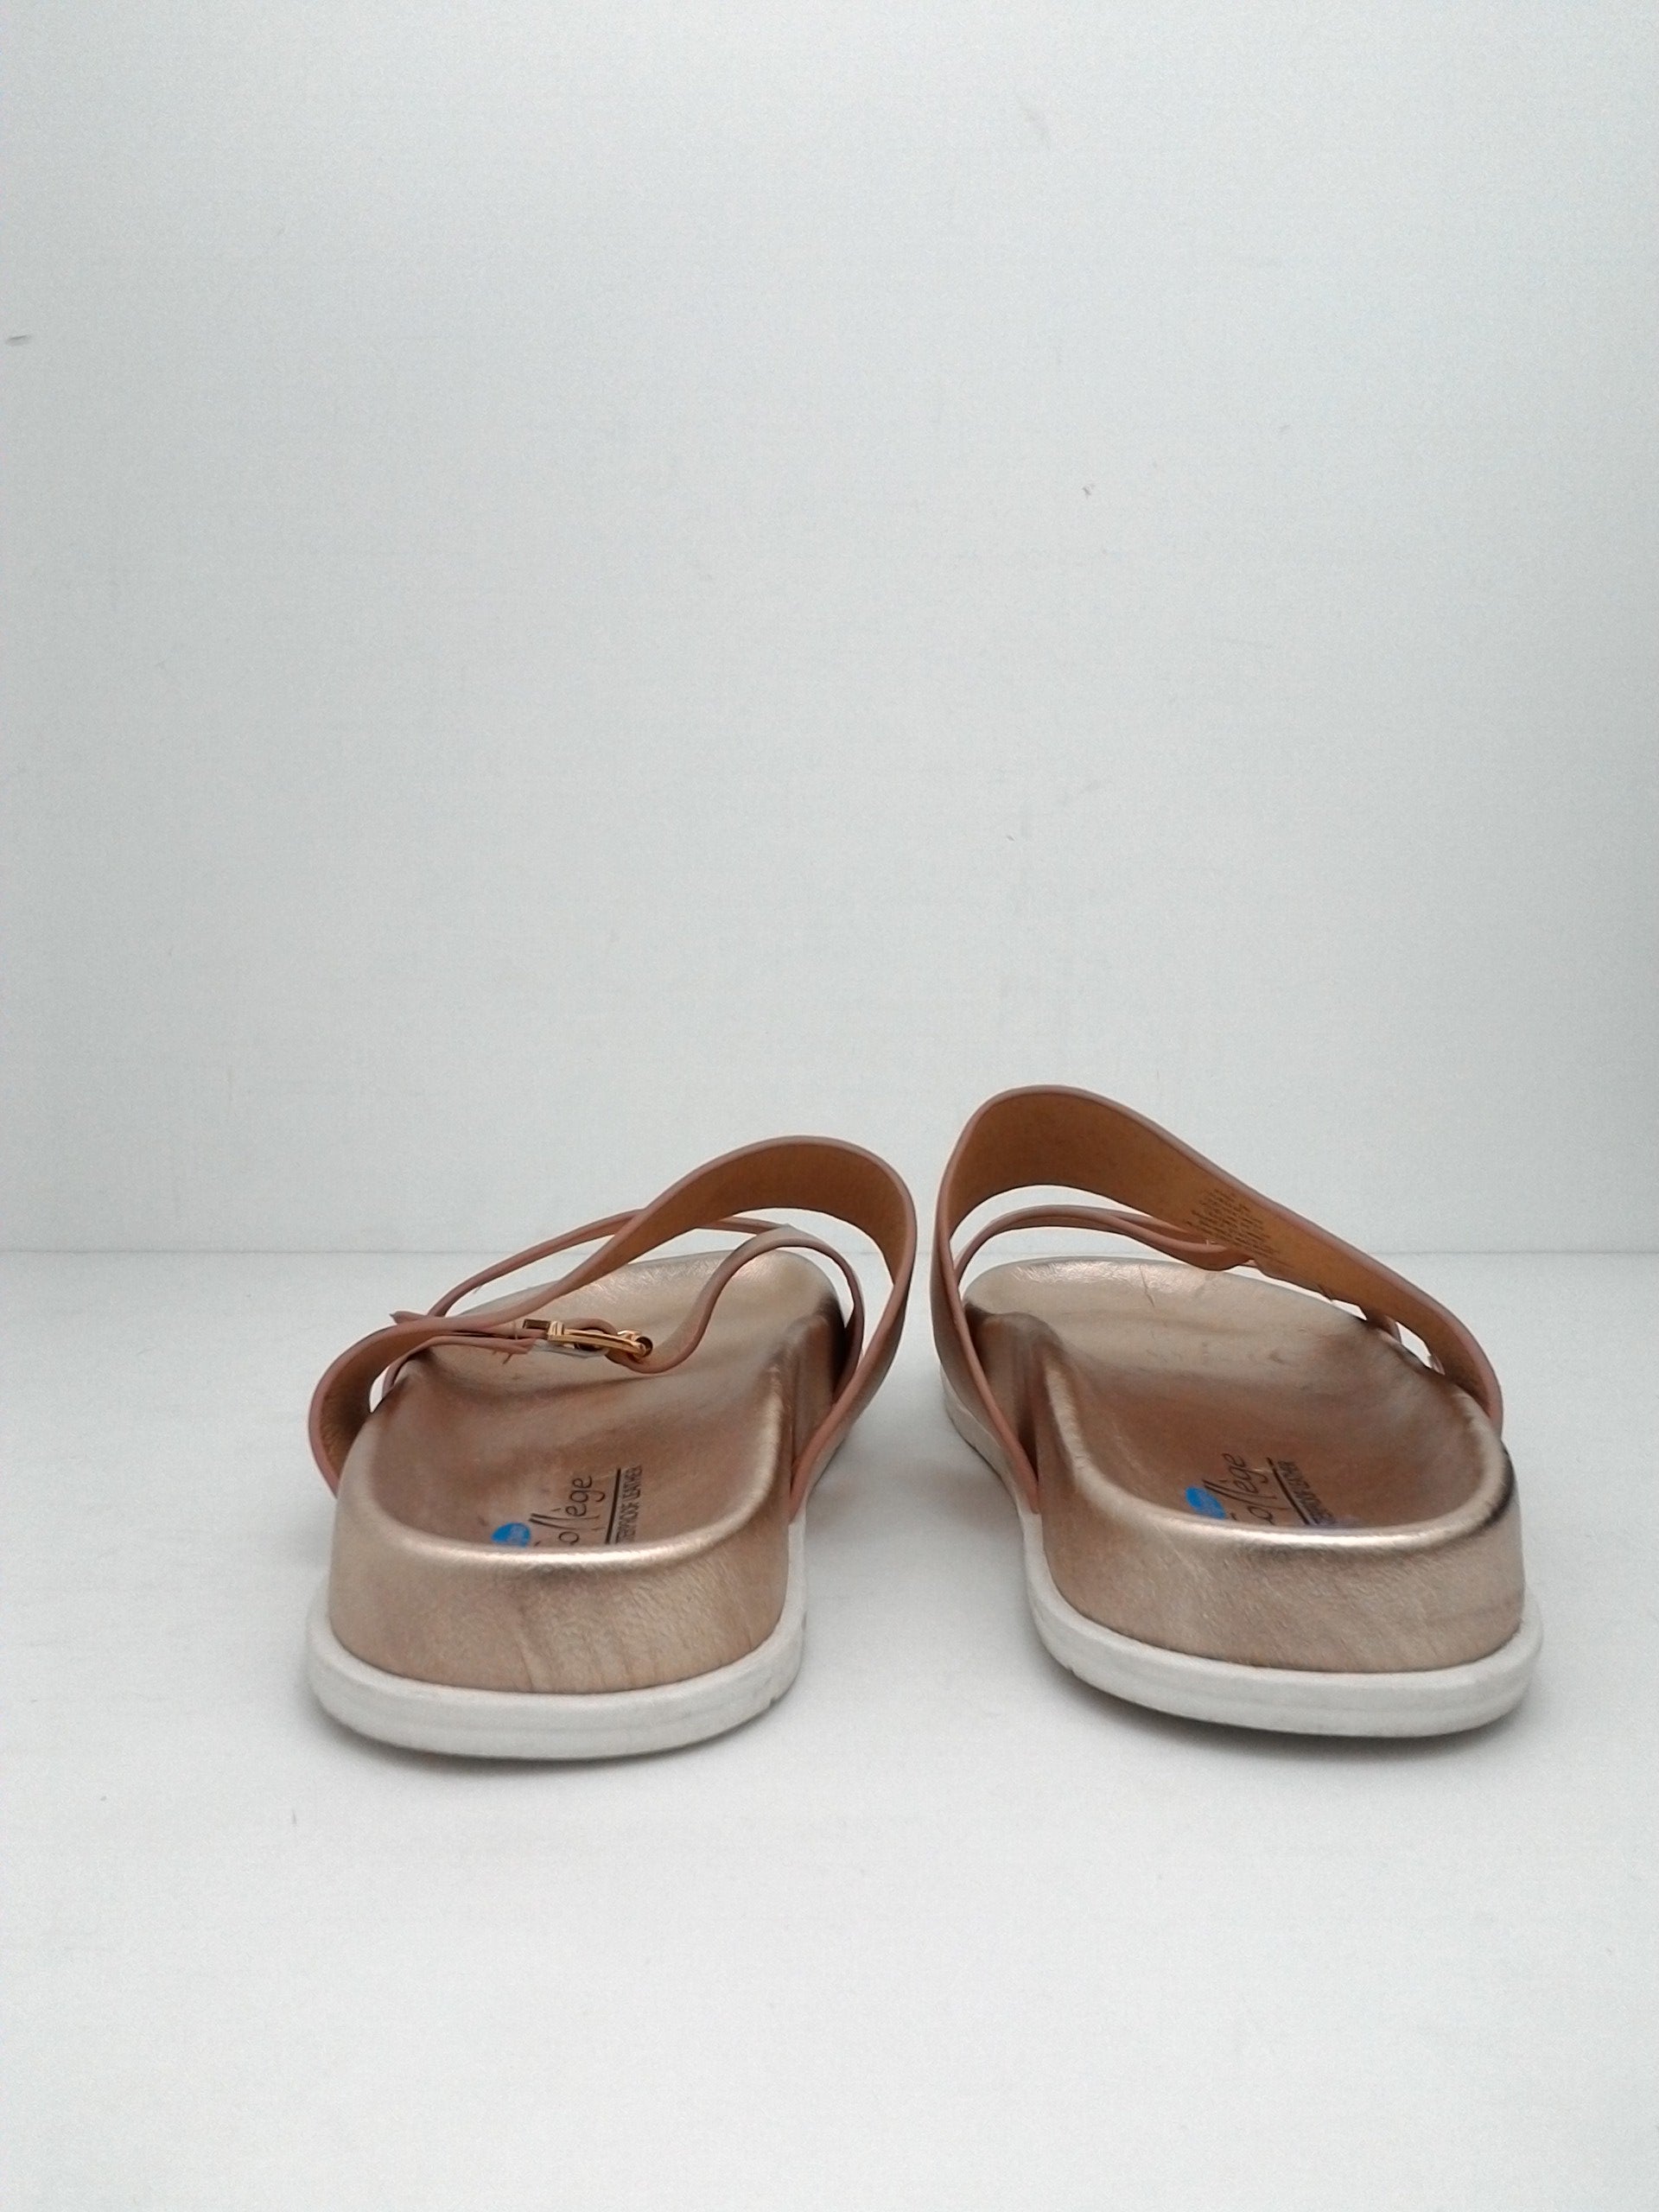 Aqua College Waterproof Leather Women's Slide Sandals Size 7 M - Prime ...